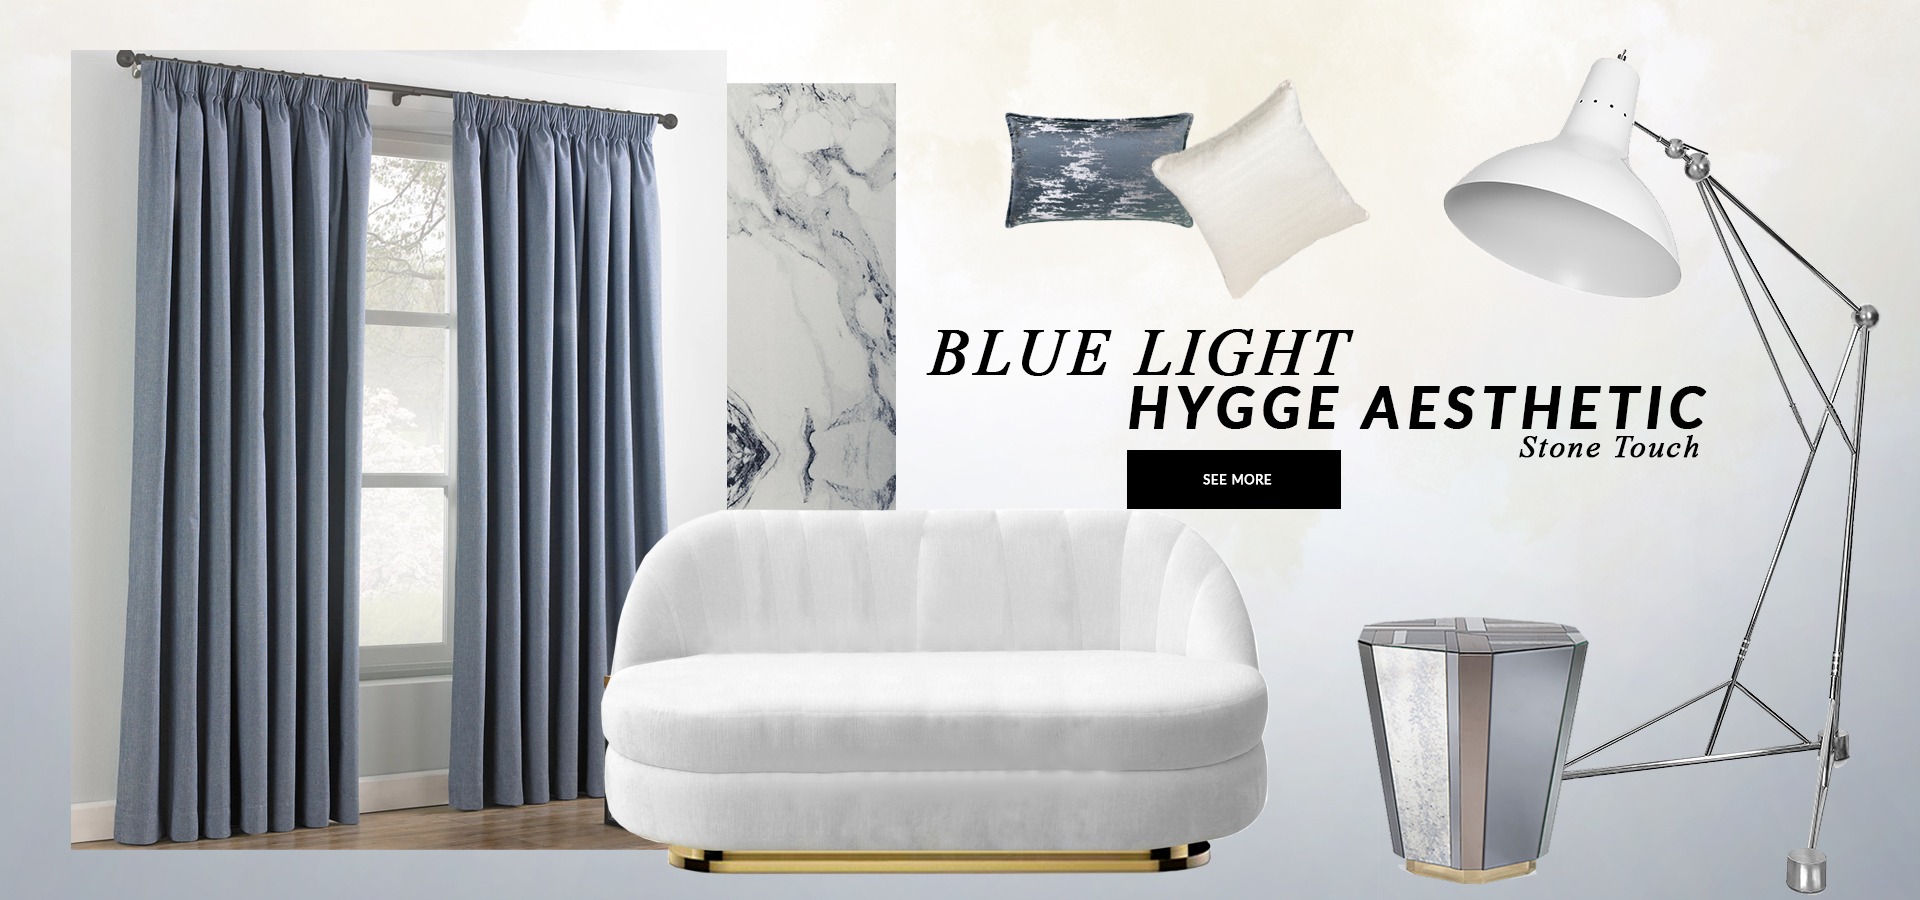 BlueLight HyggeAesthetic BlueLight